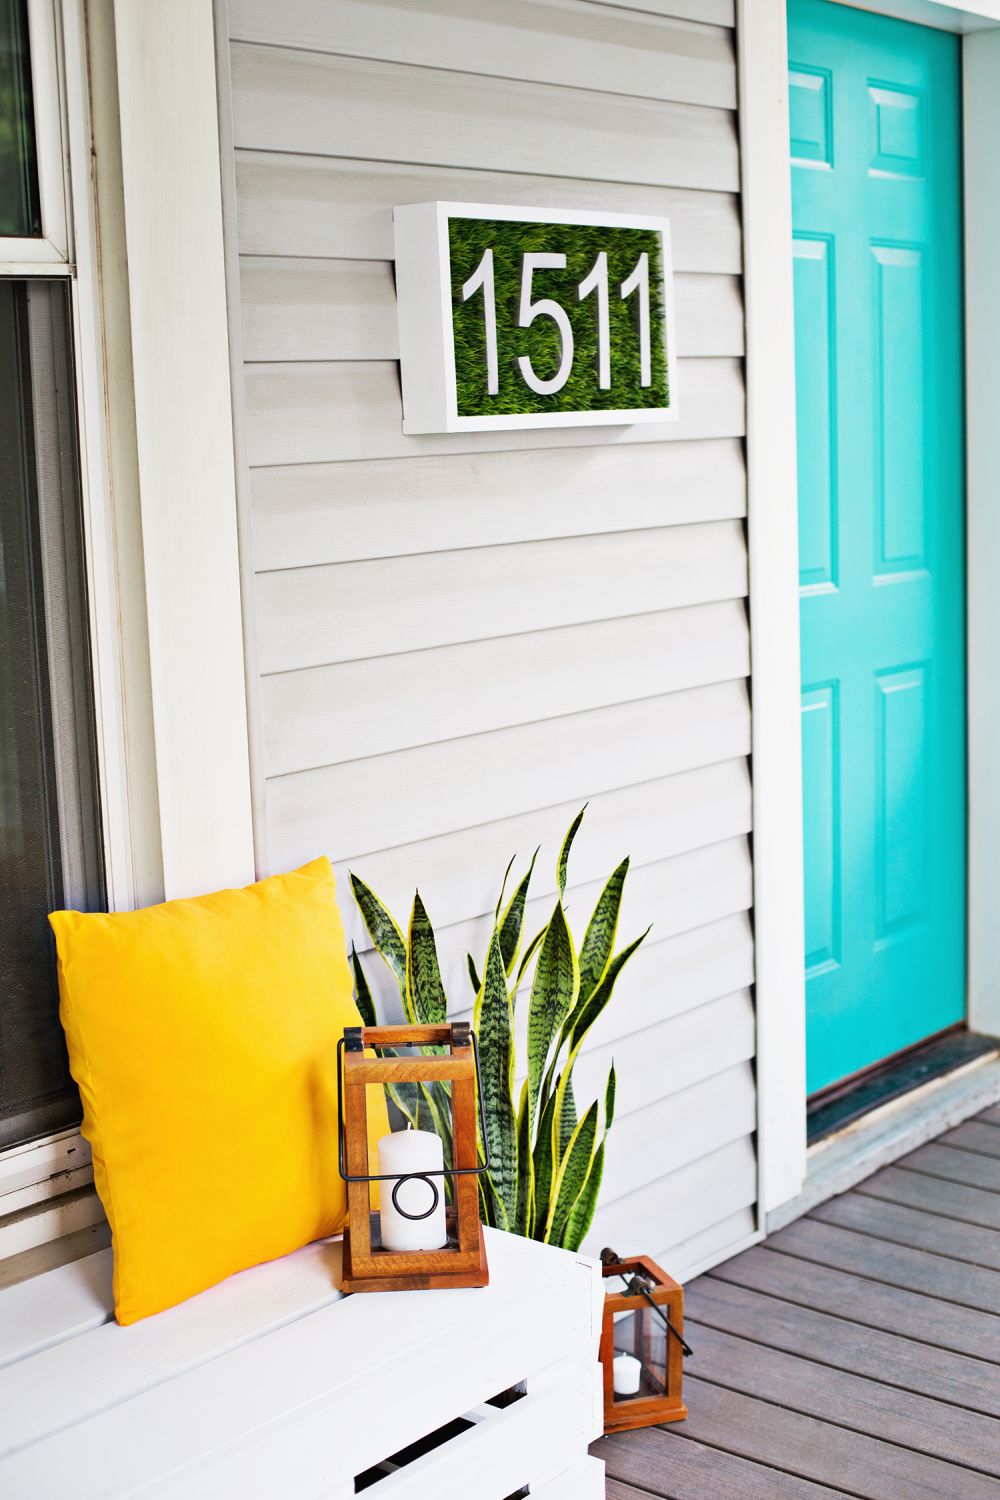 5 Creative House Number Ideas to Enhance your Home's Exterior /// By Faith Provencher of Design Fixation #DIY #home #exterior #decor